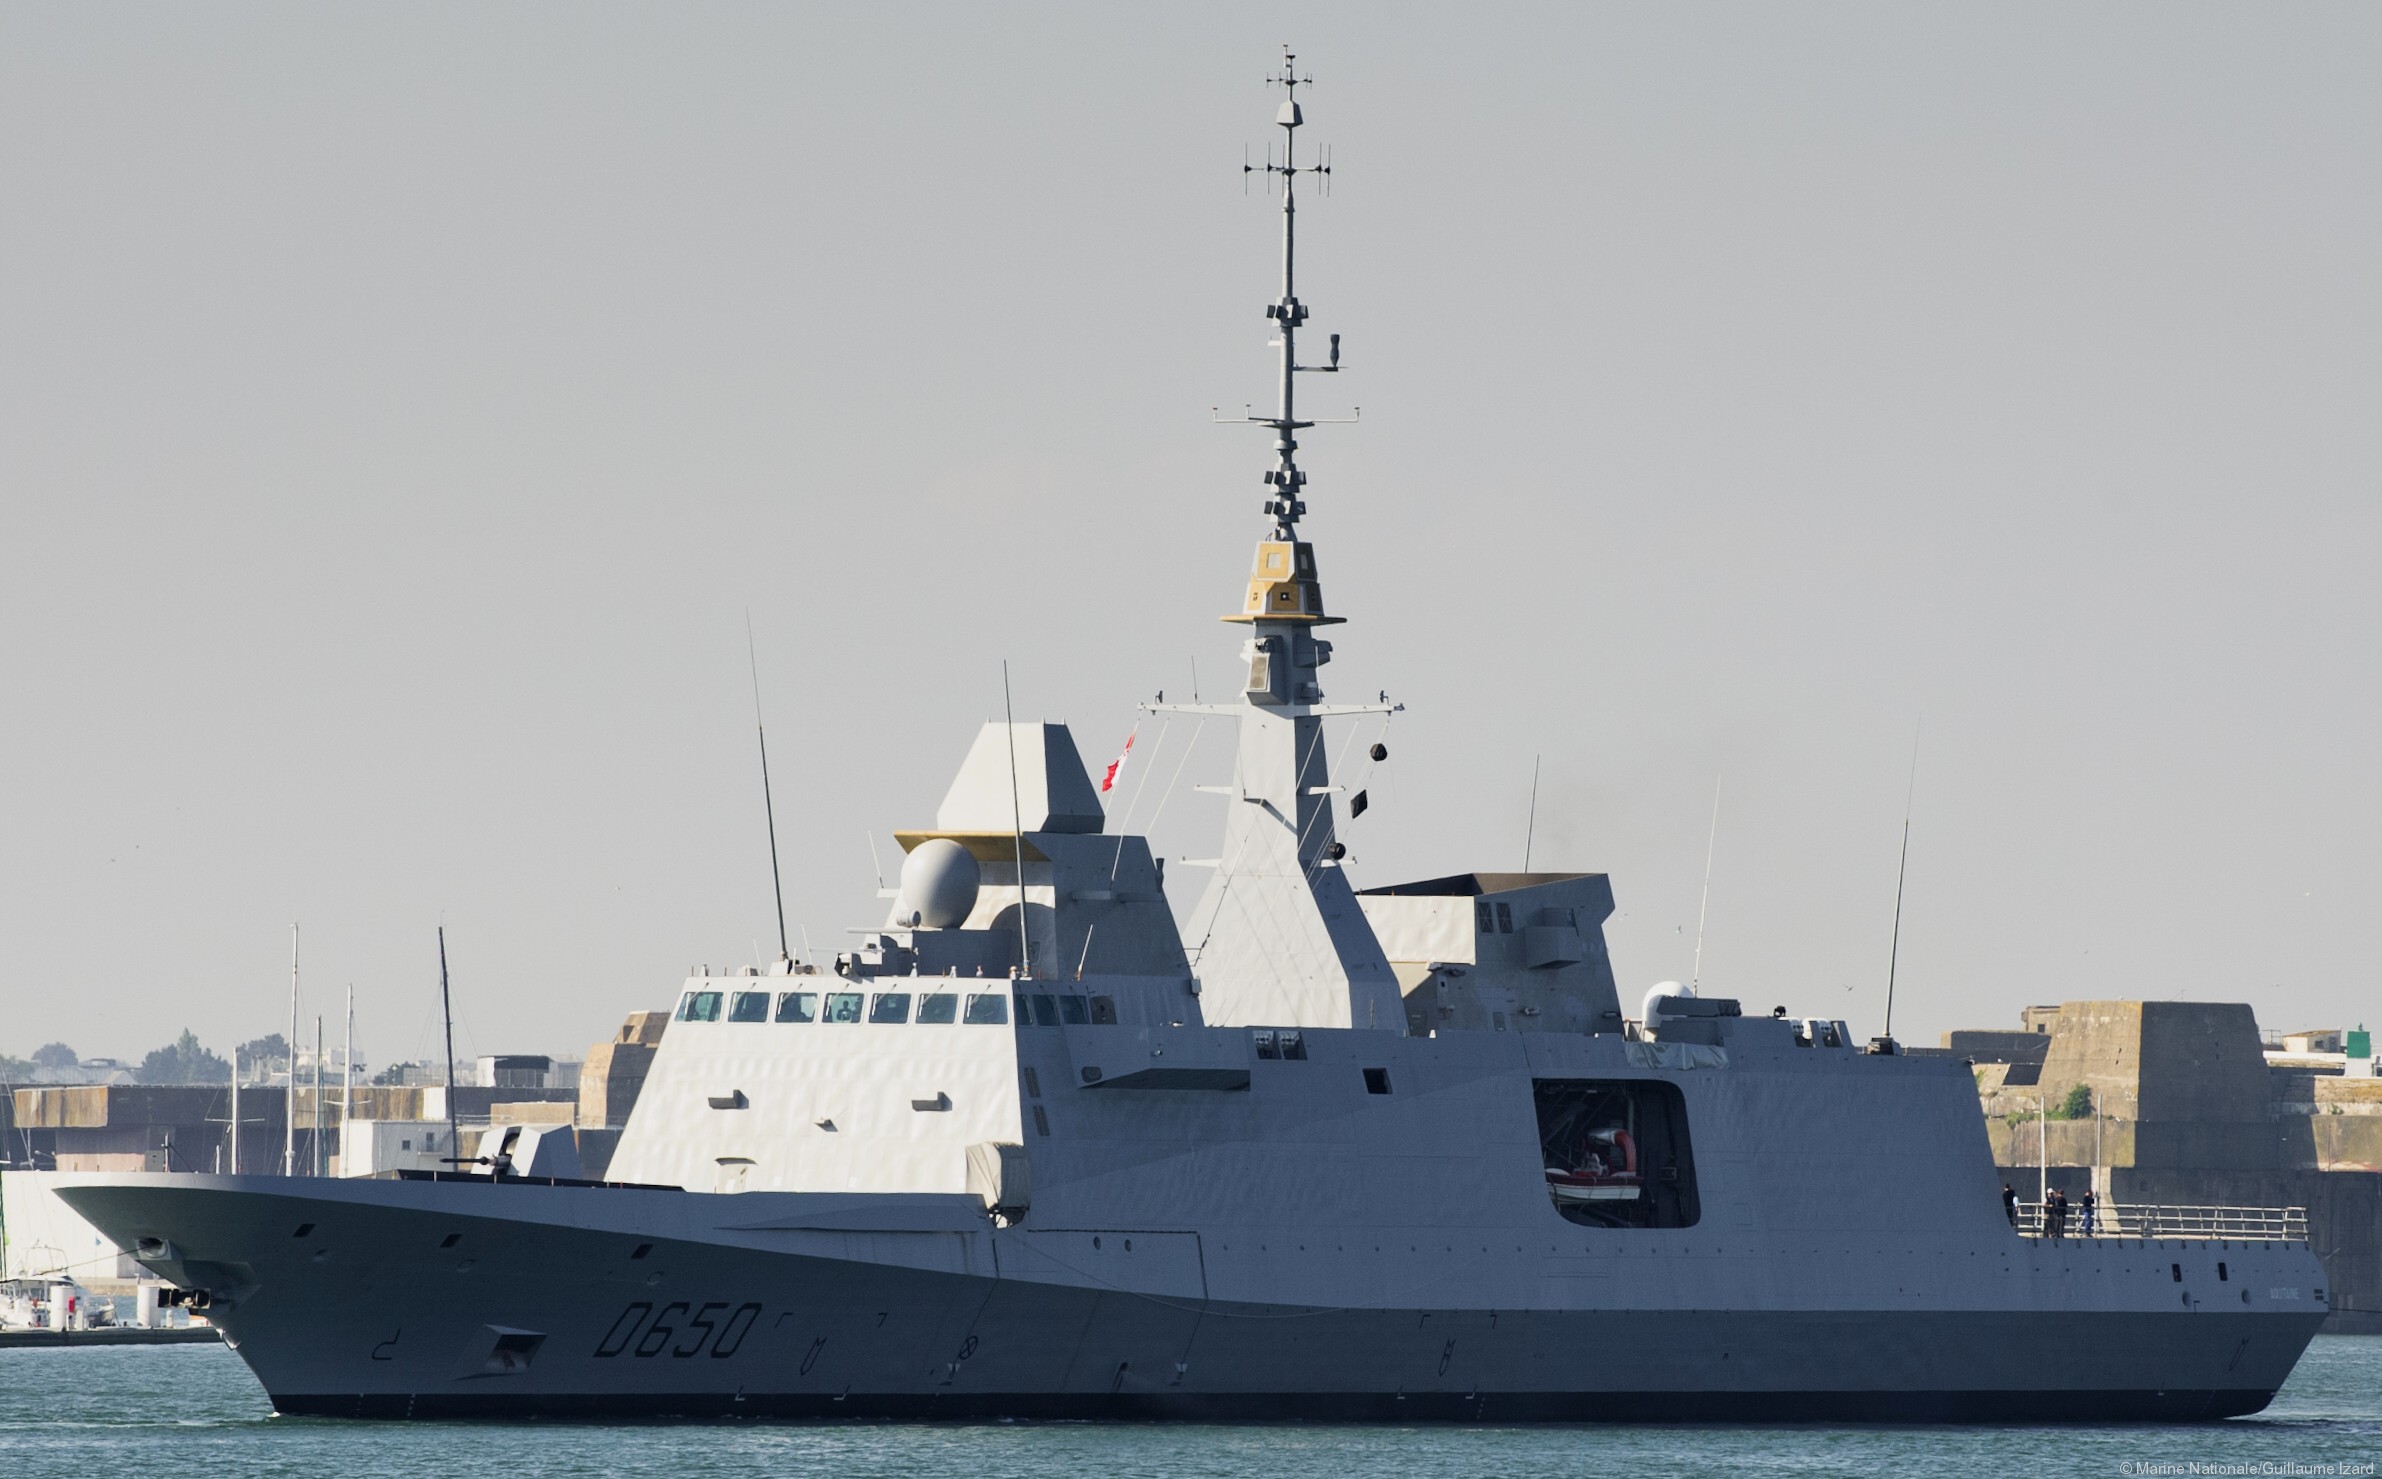 d-650 fs aquitaine fremm class frigate fregate multi purpose french navy marine nationale 08